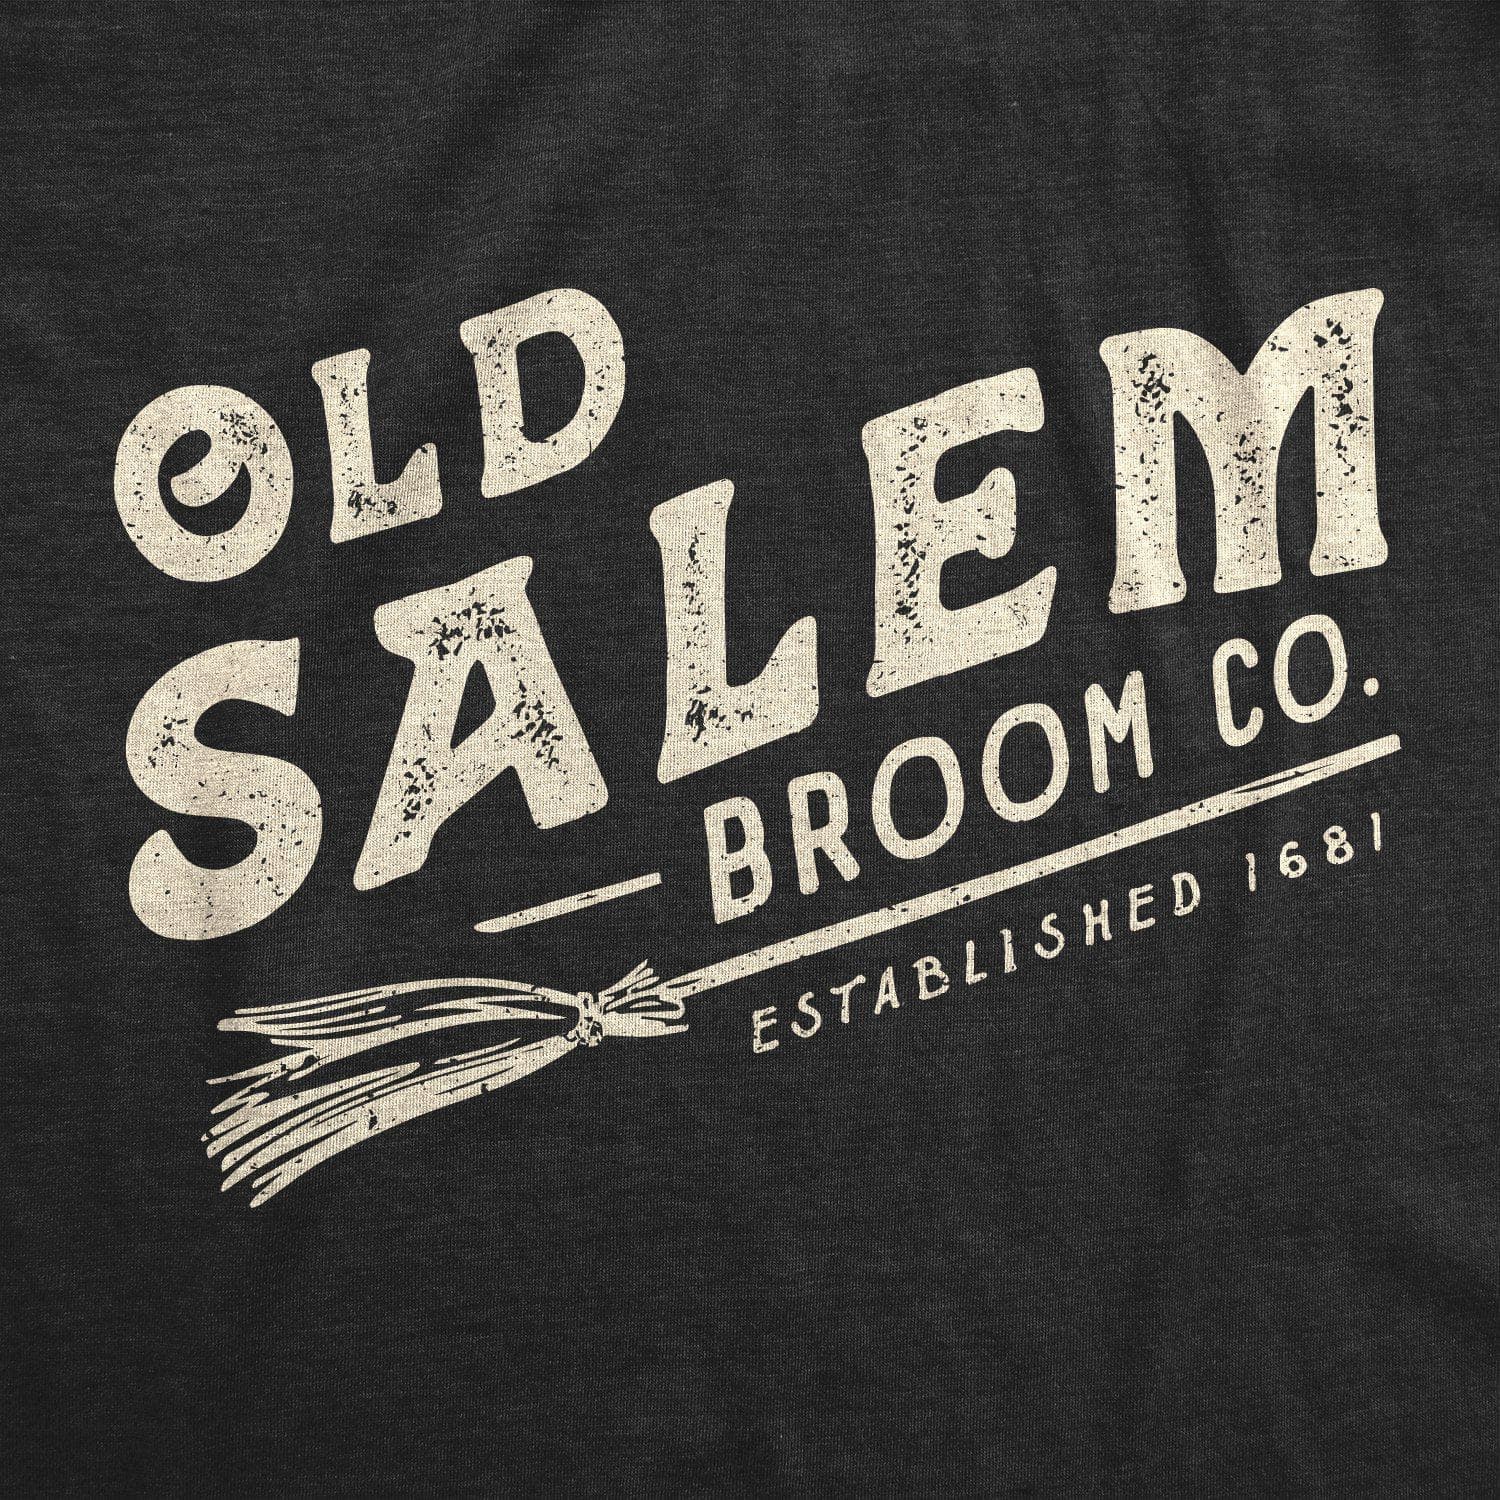 Old Salem Broom Co. Women's Tshirt - Crazy Dog T-Shirts